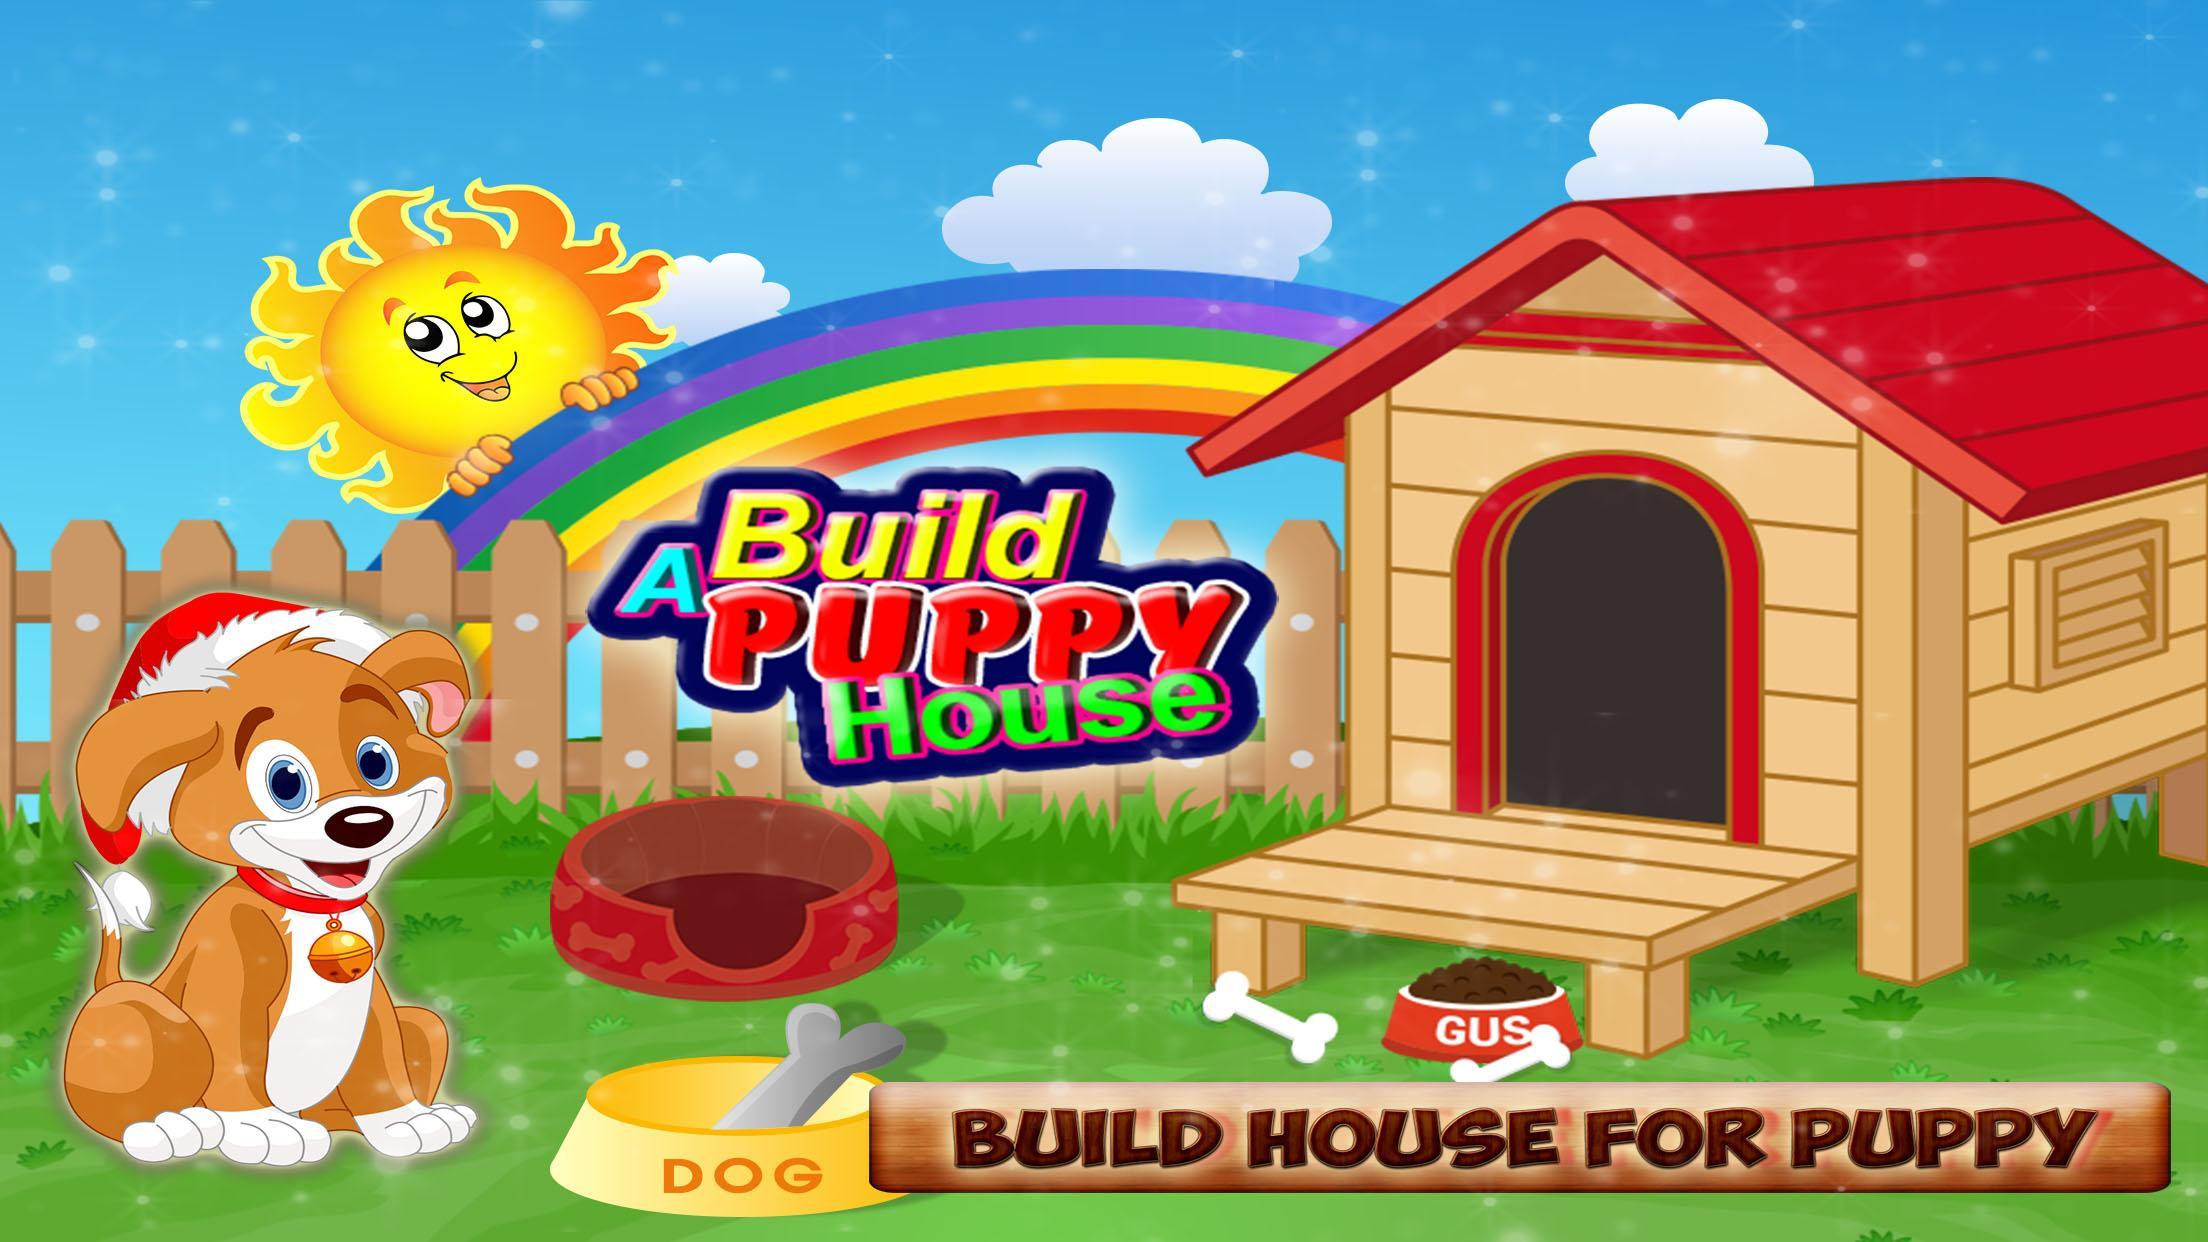 Dog House game. Dog House game: Pet Home decoration game. Sunny House игра. Dog House game лапка. Играть в дог хаус dogs house net